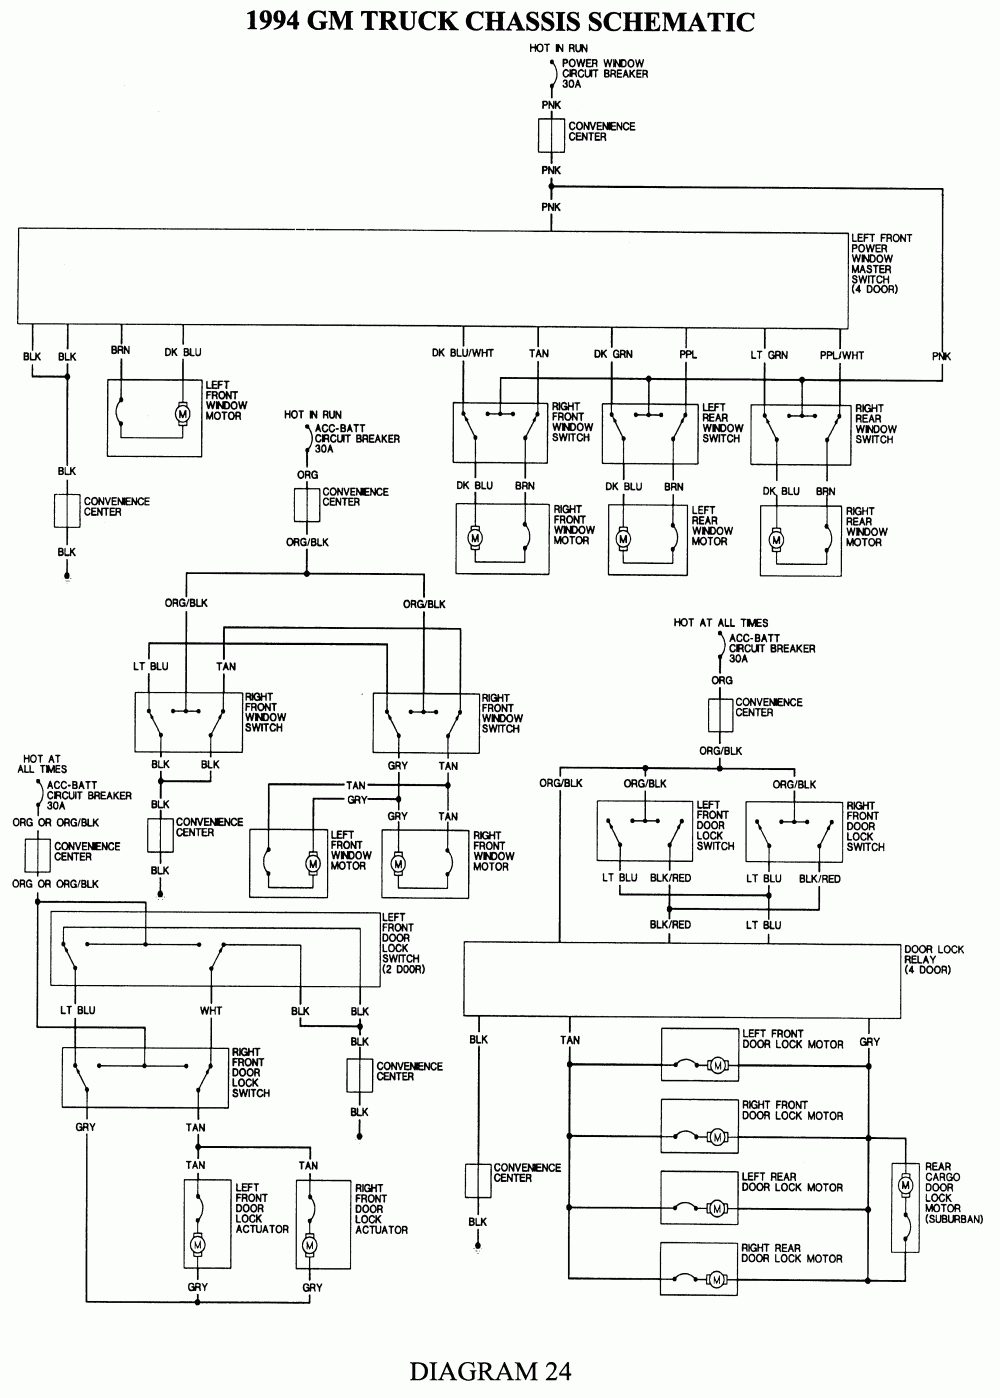 Wiring Diagrams 1993 Chevy Truck - Wiring Diagram Detailed - 1993 Chevy Silverado Wiring Diagram